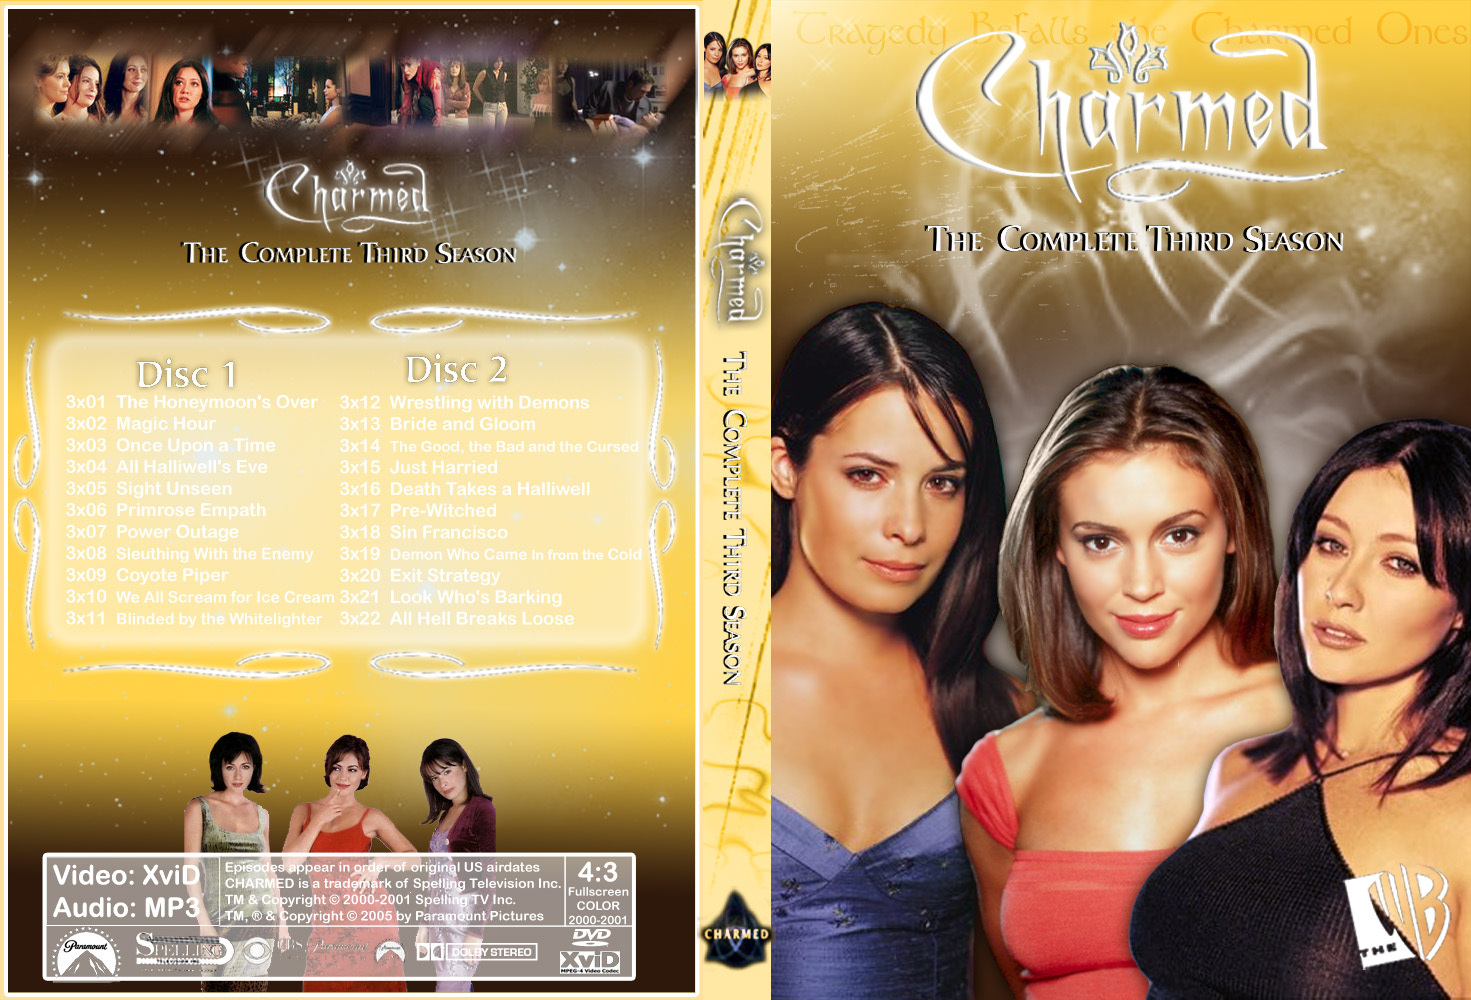 Charmed-Season-3-Dvd-Cover-Made-By-Chibiboi-charmed-1410750-1471-1000.jpg